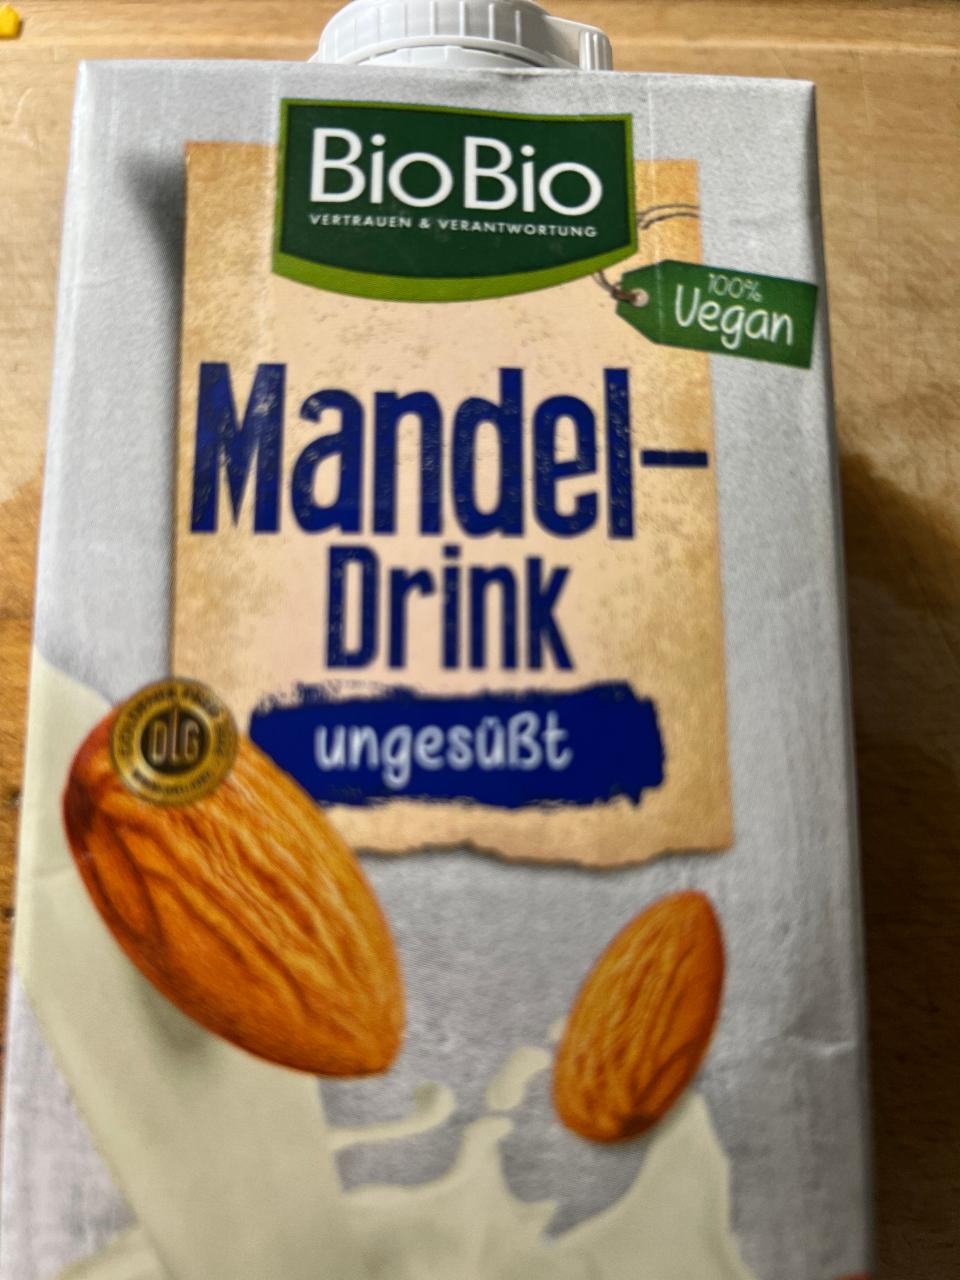 Fotografie - Mandel-Drink ungesüßt BioBio